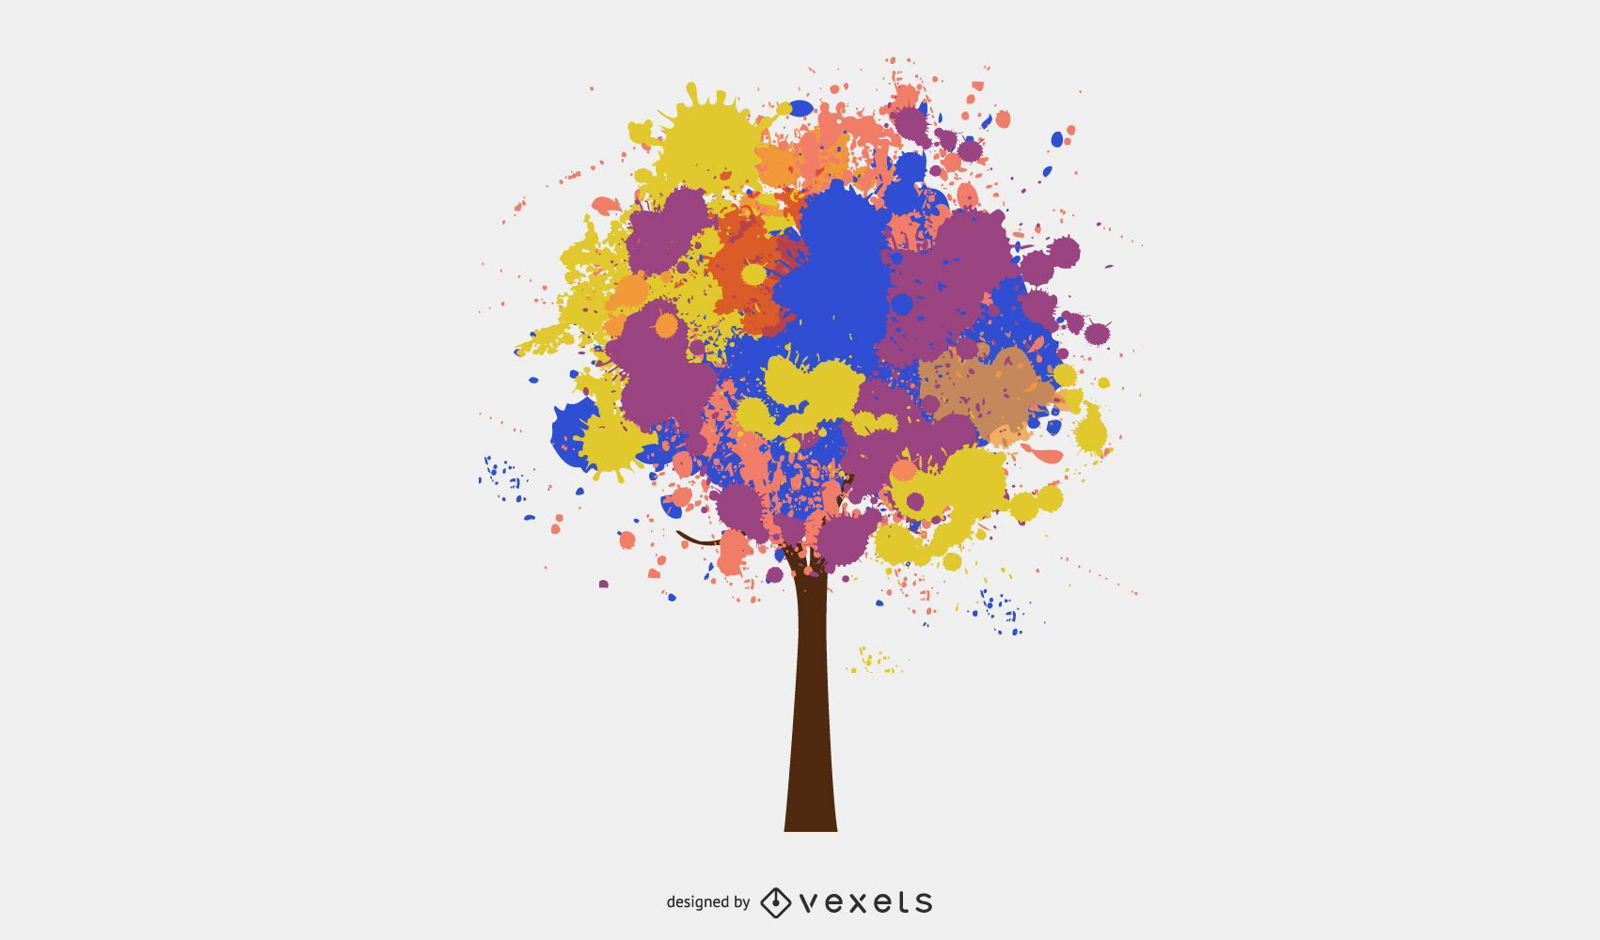 Árvore com respingos de tinta colorida